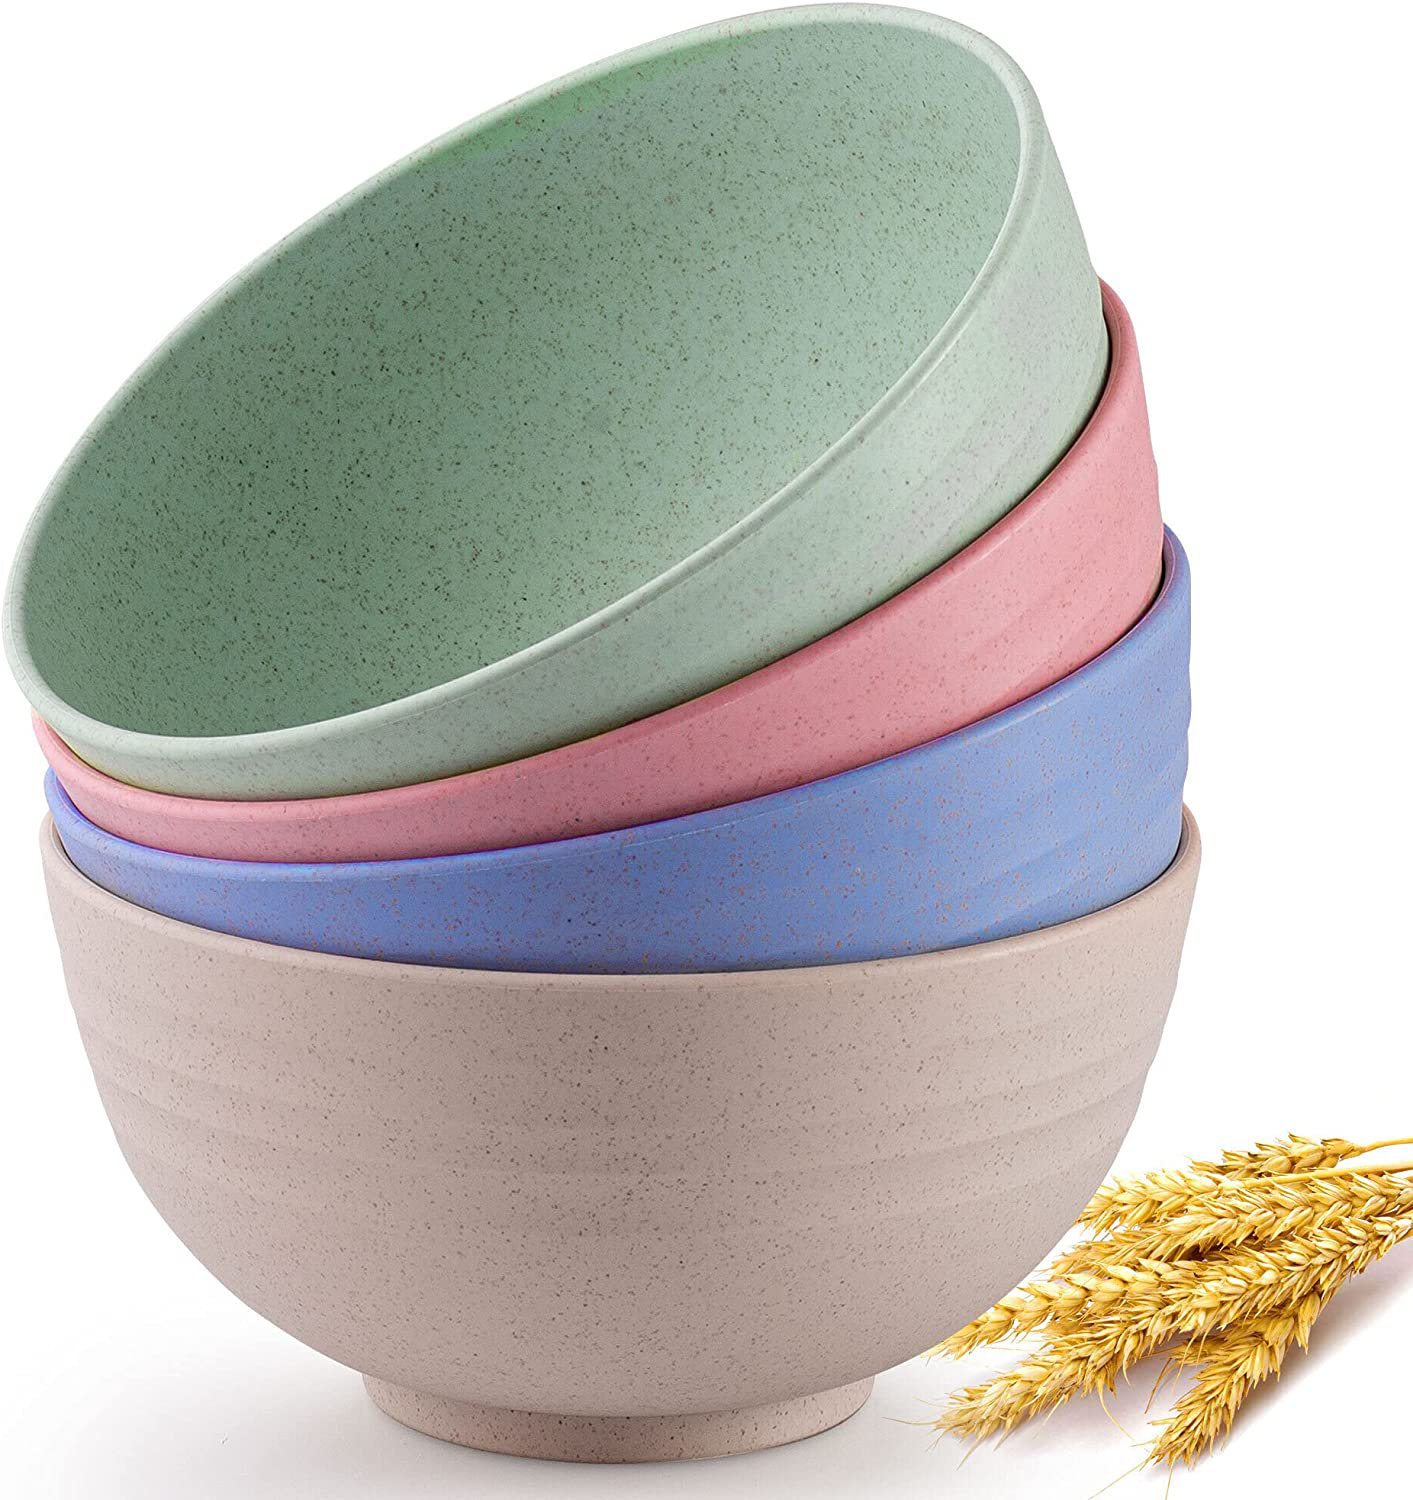 Unbreakable Cereal Bowls - 24 OZ Wheat Straw Fiber Lightweight